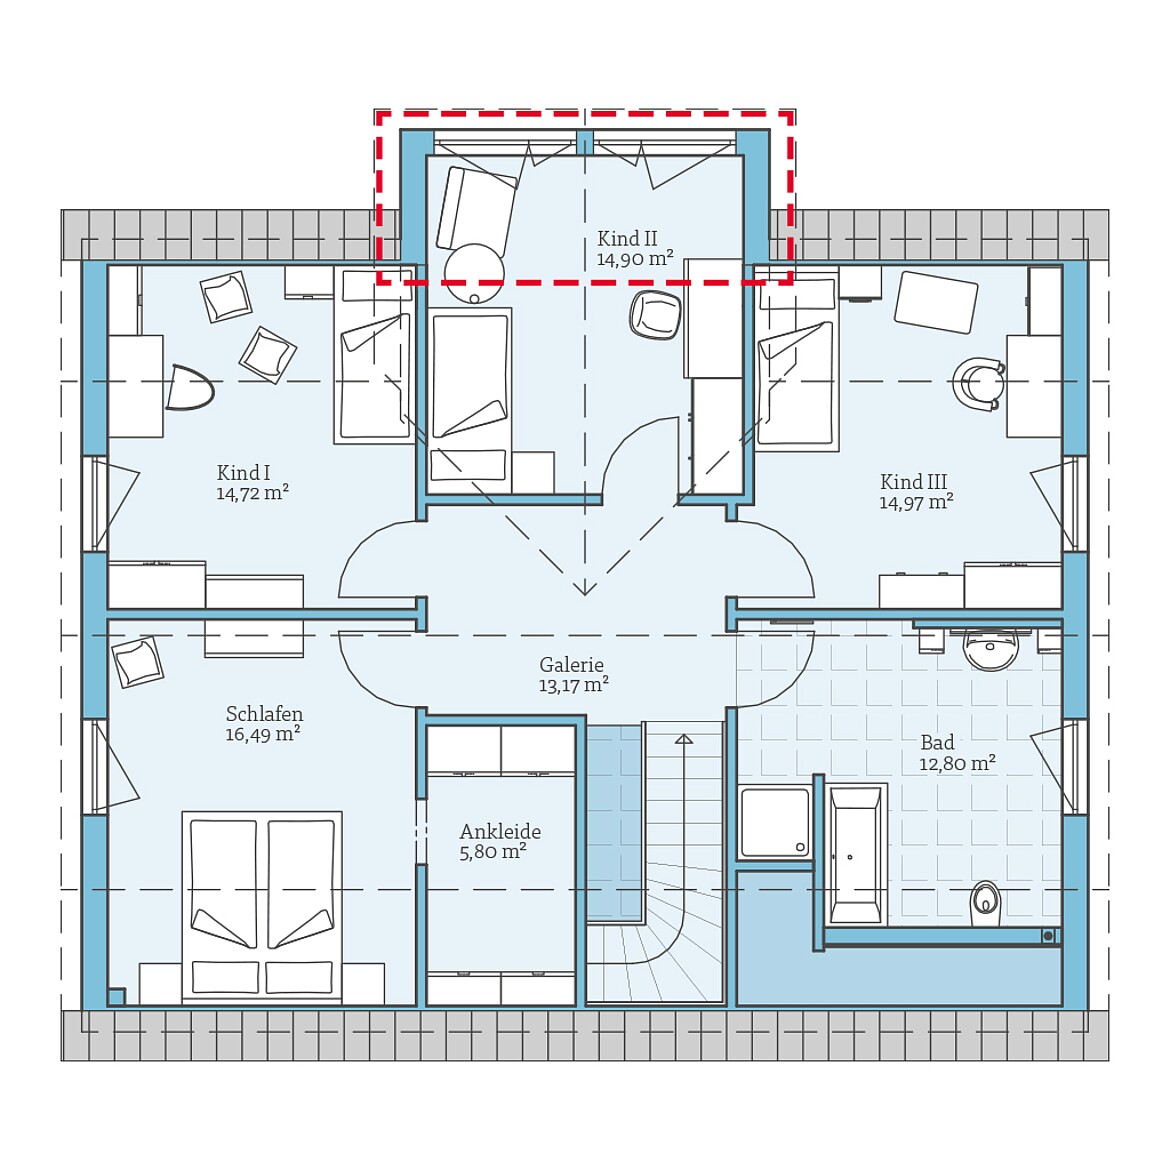 Prefabricated house Variant 35-184: Top floor plan option